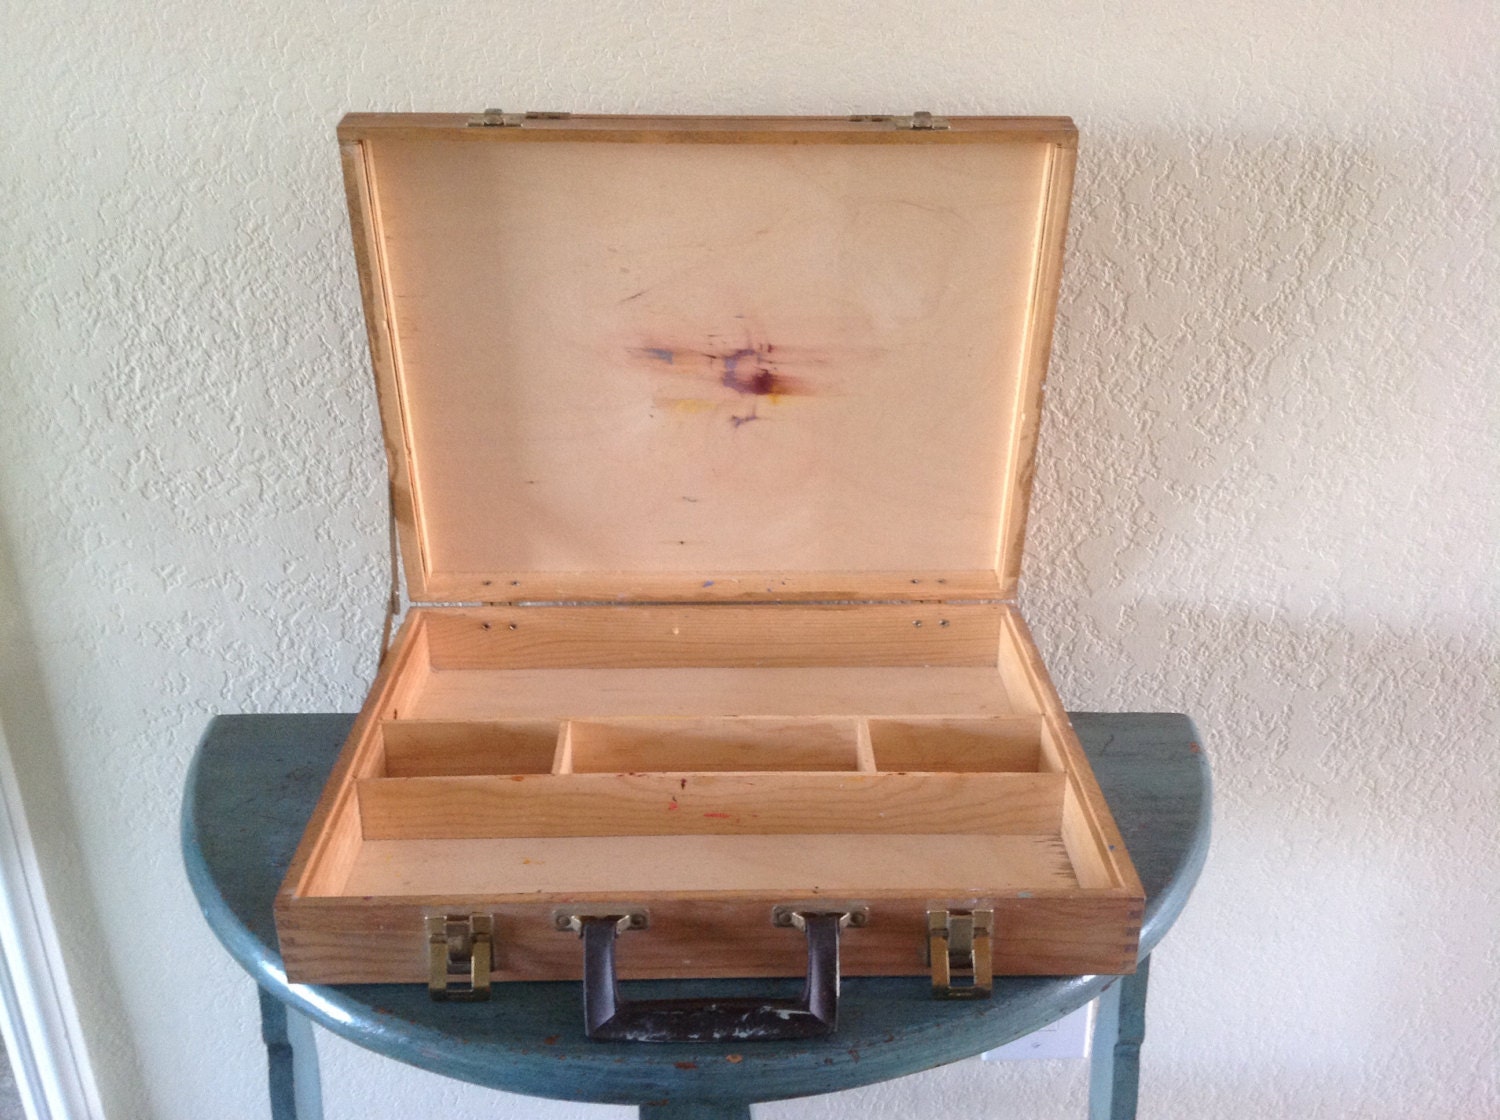 Painter's Art supply travel case / wooden travel case has